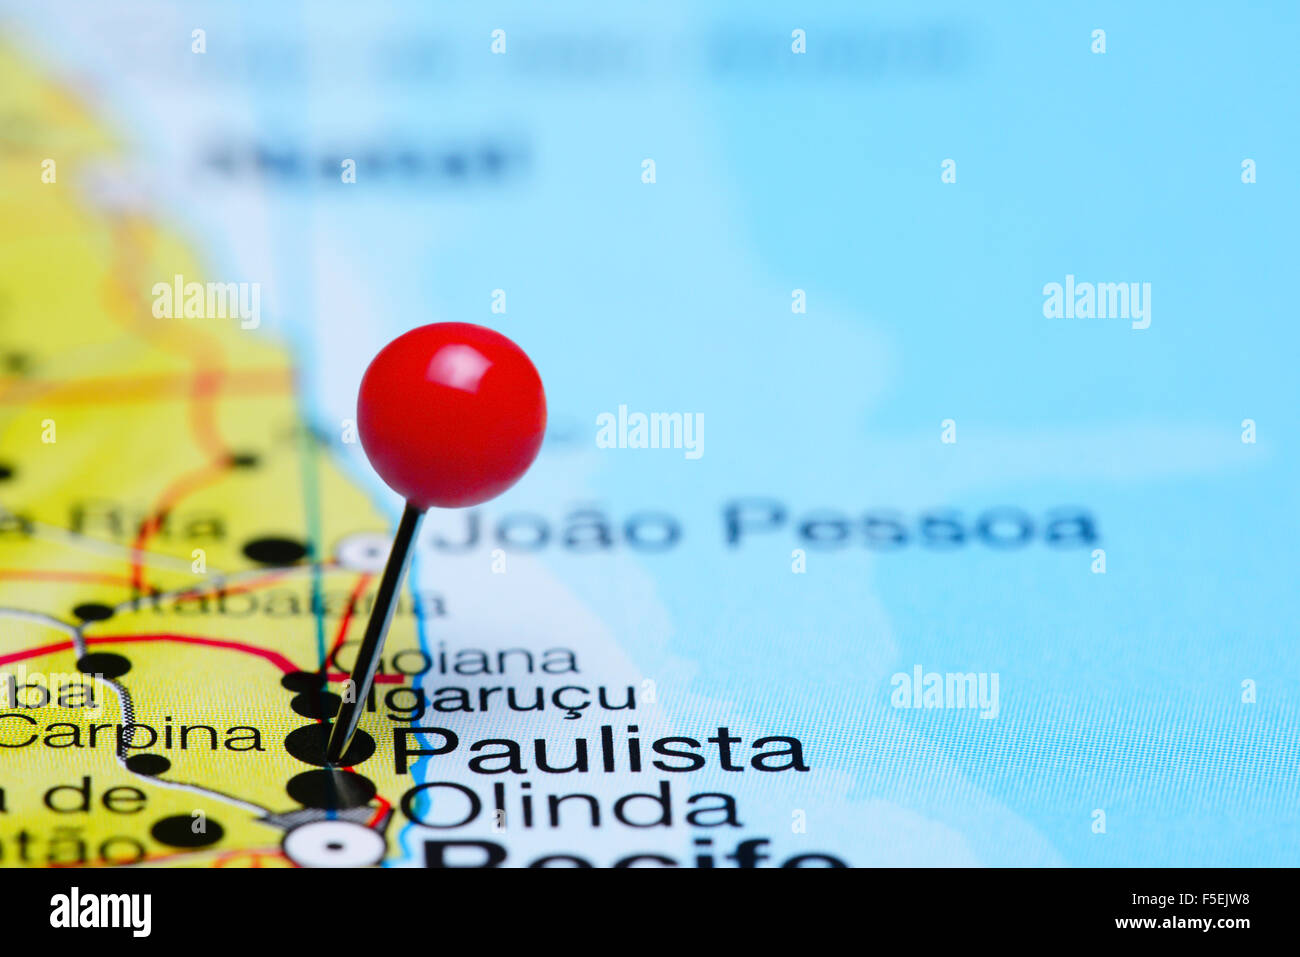 Paulista pinned on a map of Brazil Stock Photo